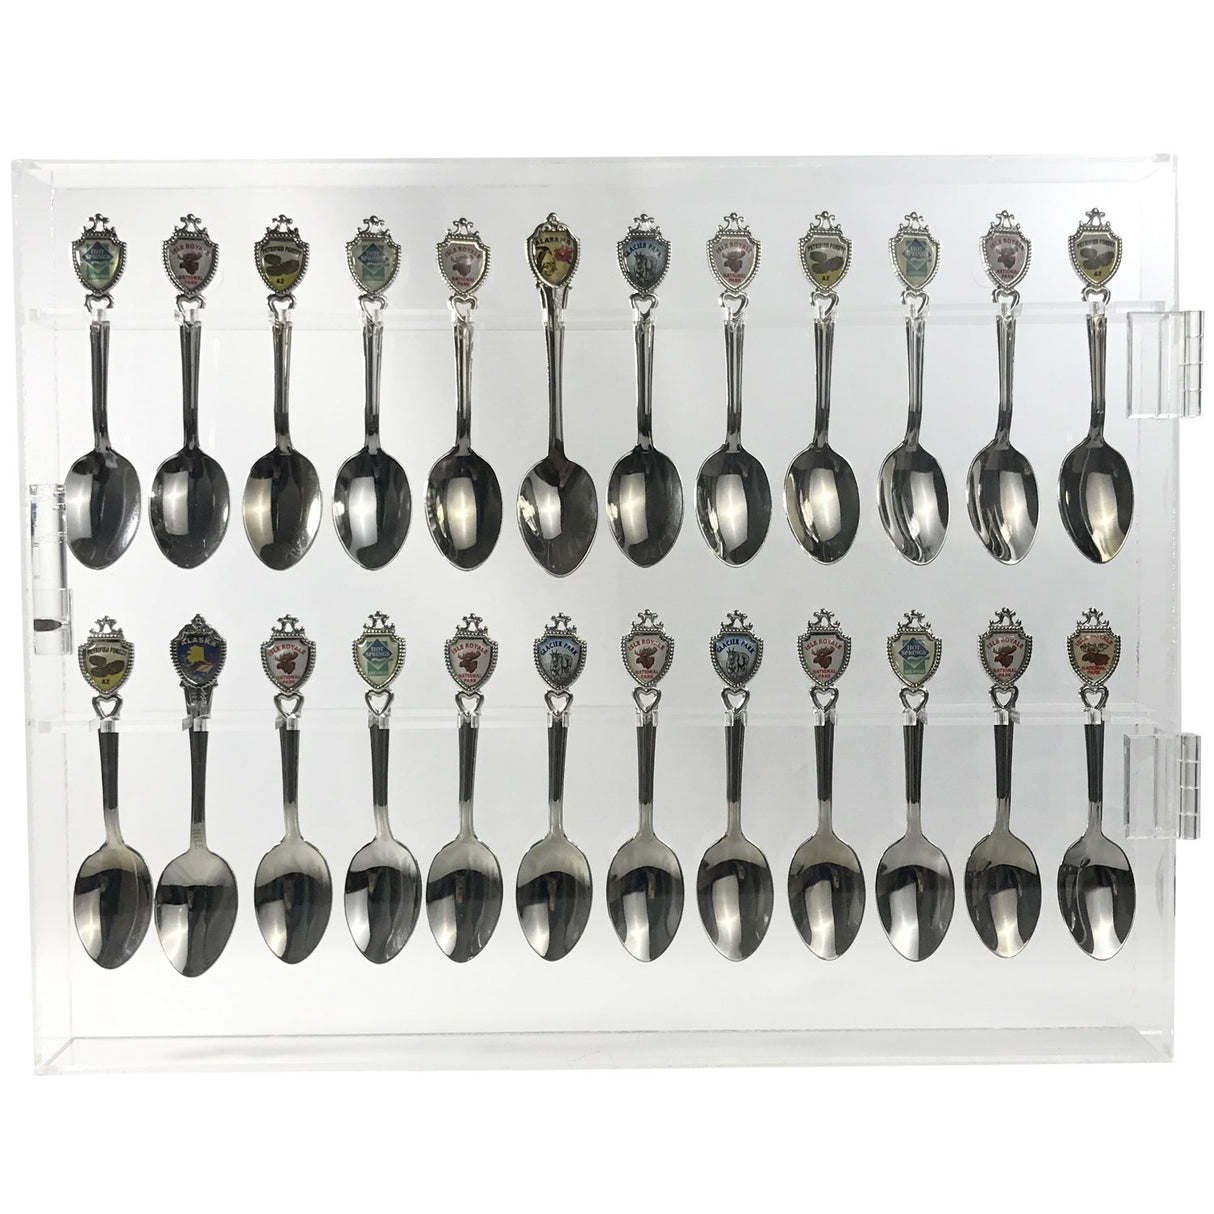 Ikee Design Premium Acrylic Souvenir Spoon Display Case, Wall Mountable Spoon Collections Organizer Storage Holder, Tea Spoon Storage Display Box, 13 7/8”W x 1 3/4”D x 10 7/8" H